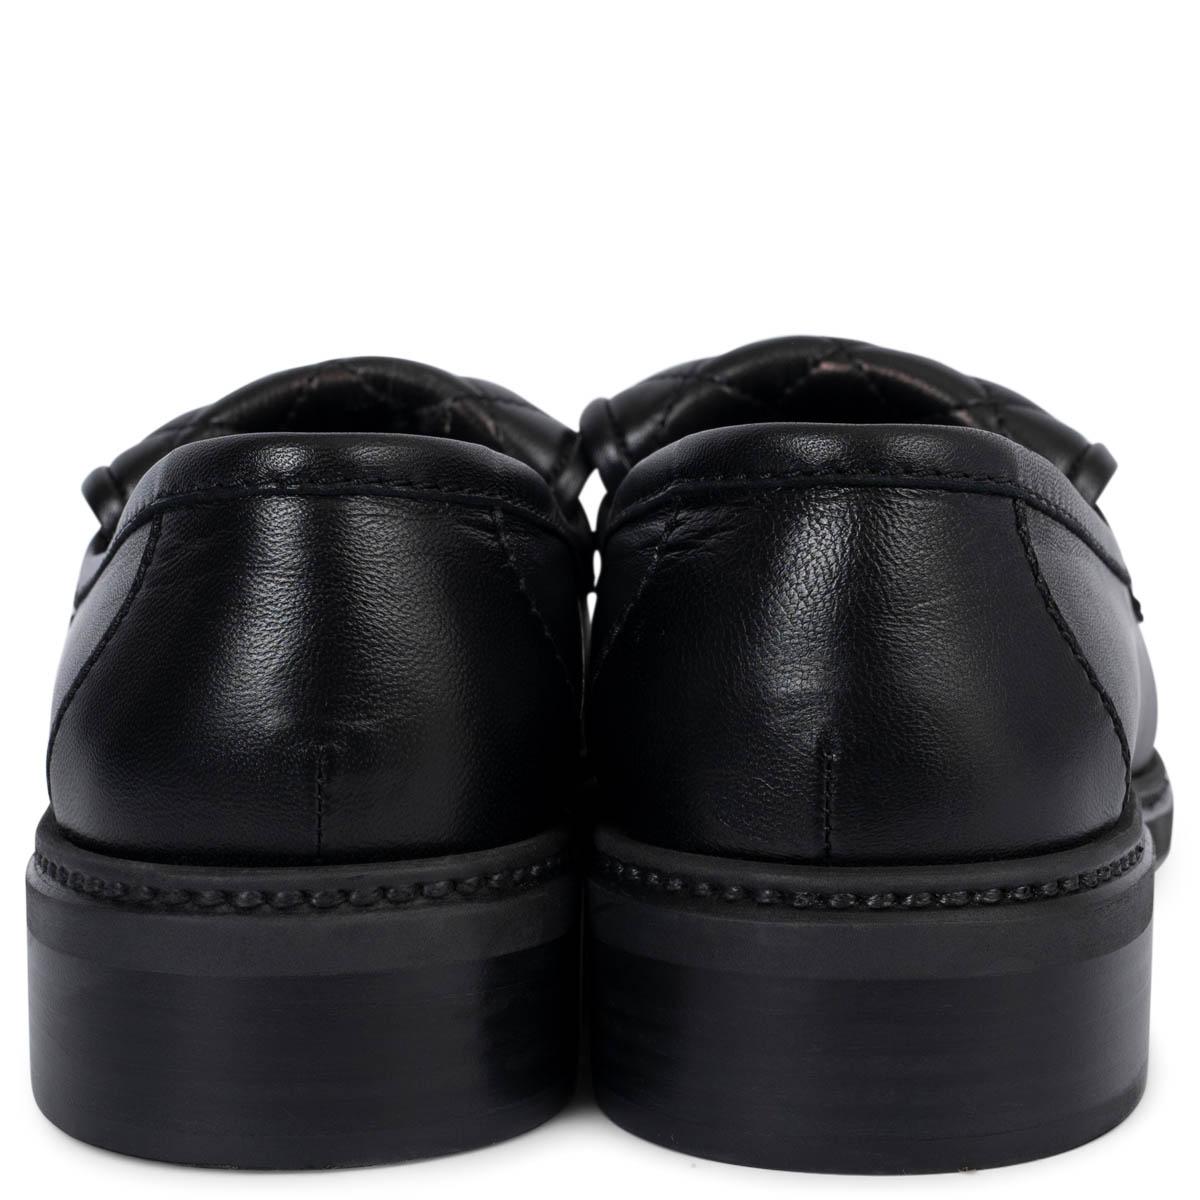 CHANEL cuir noir REV TURNLOCK Mocassins Chaussures 39 en vente 1